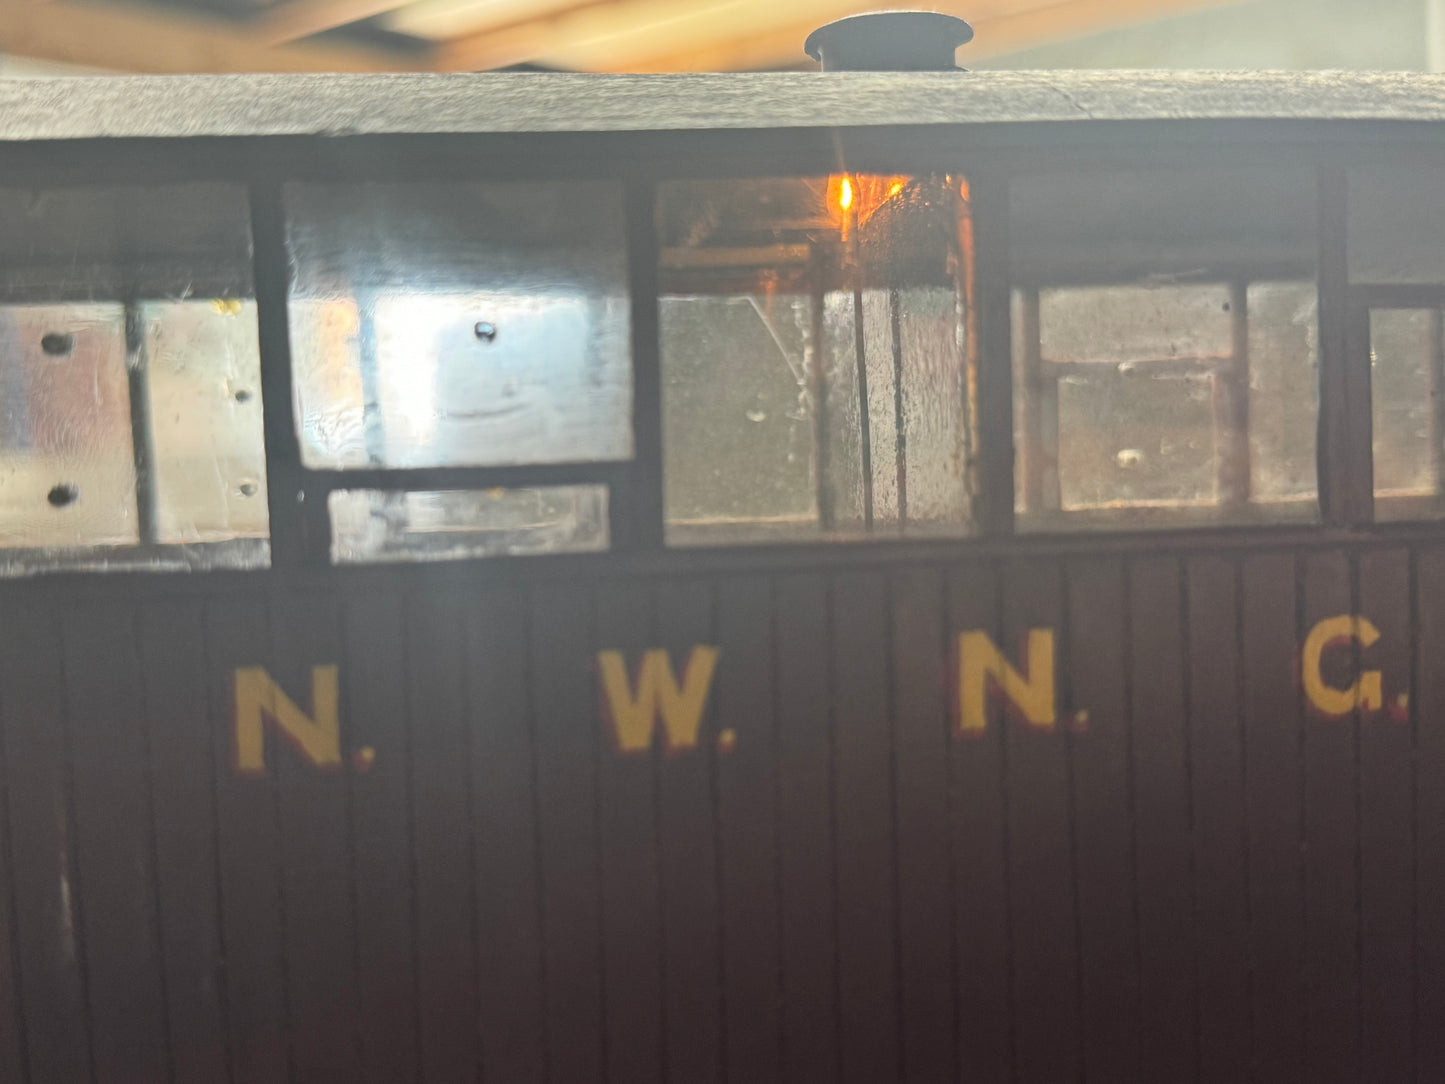 Beeson (16MM Scale / O Gauge) North Wales Narrow Gauge Railway, Coach No.7 in unlined Maroon.